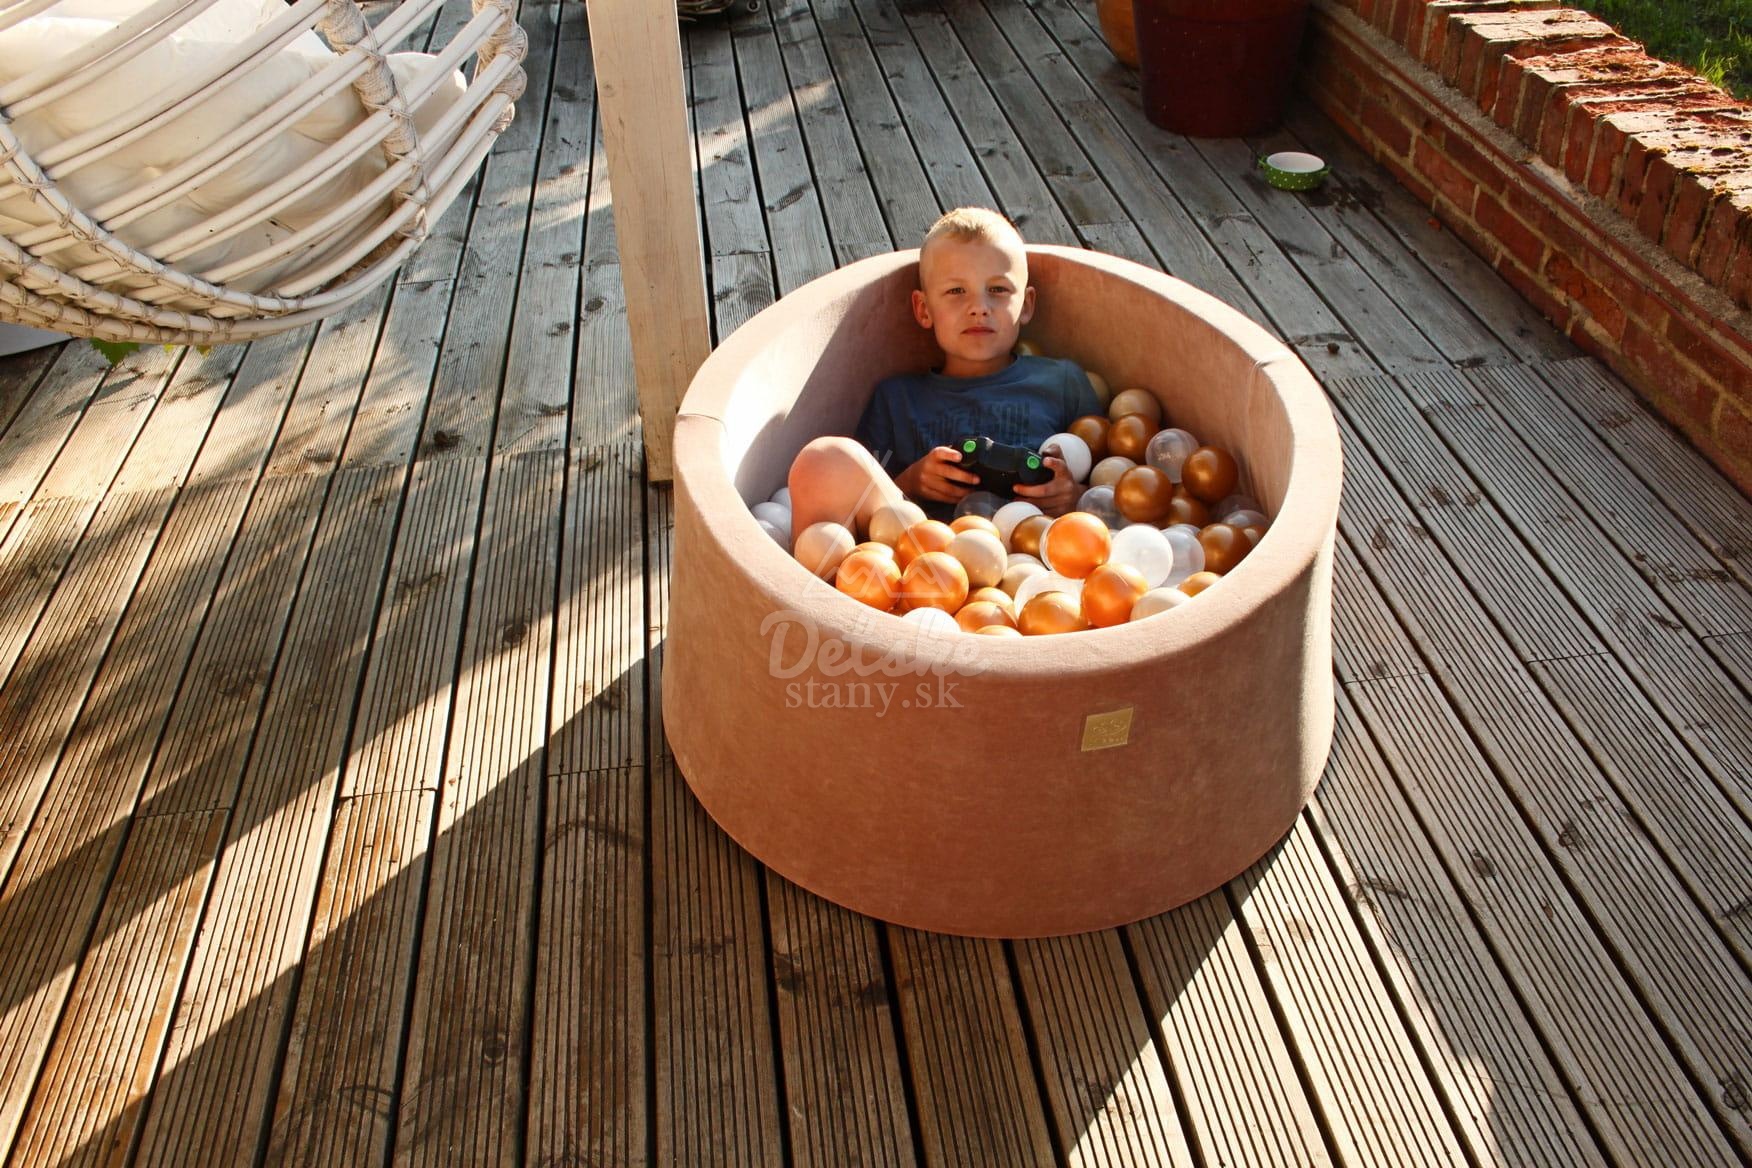 Detský suchý bazén EXCLUSIVE MeowBaby® ZAMAT model Teddy Bear s guličkami 250 ks (90x40cm)